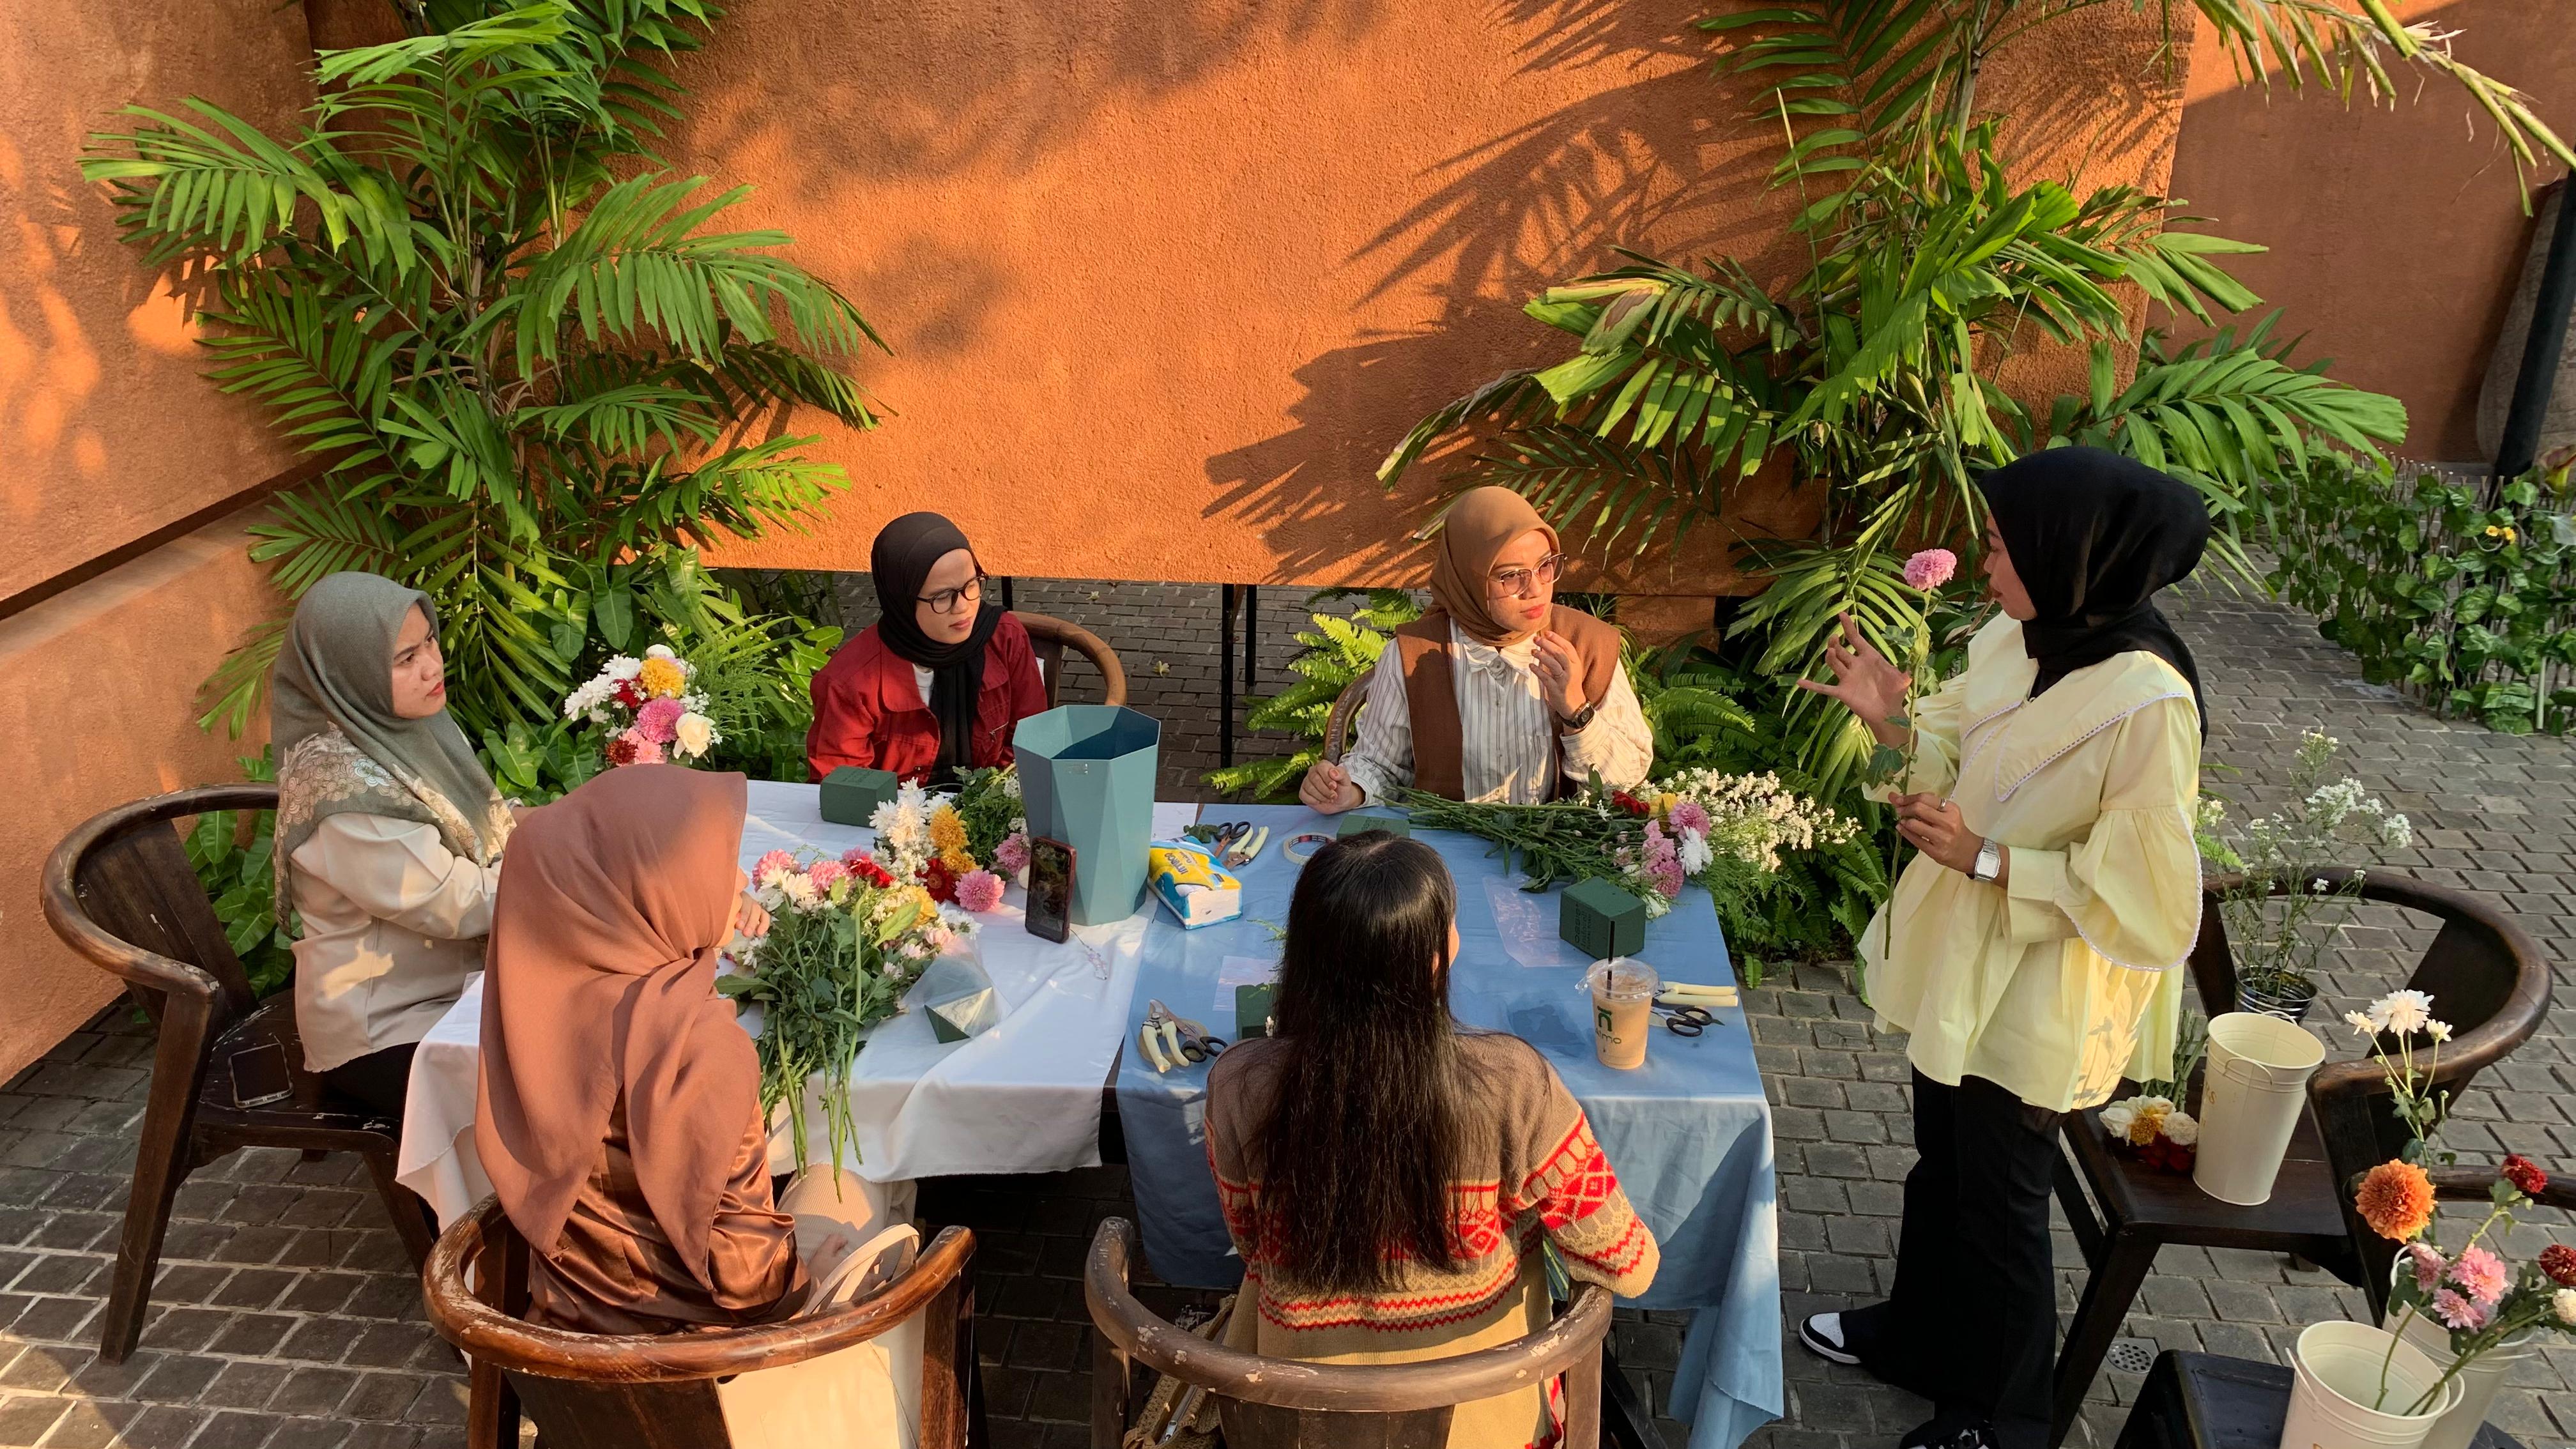 Qomi Florist Gelar Workshop Merangkai Bunga Bersama Anak Muda Bandar Lampung 